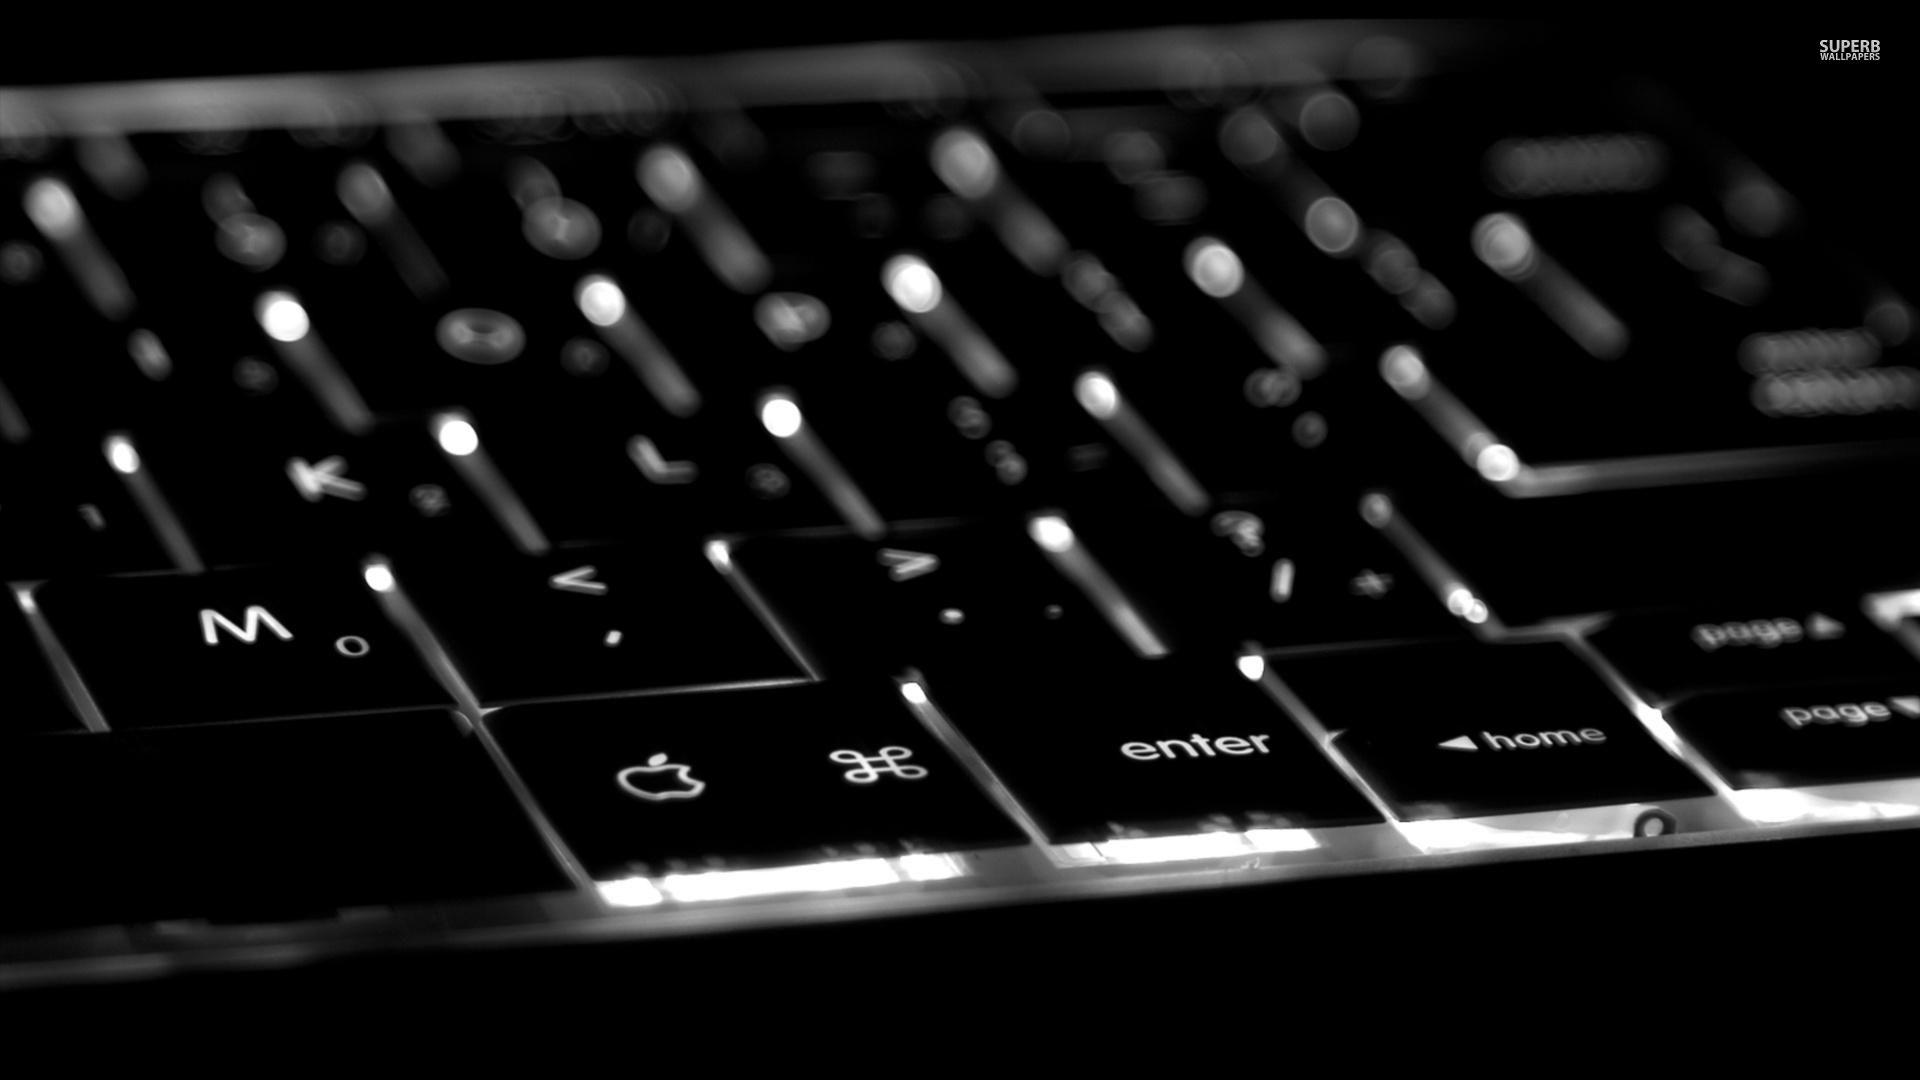 Mac Laptop Keyboard HD Wallpaper, Background Image